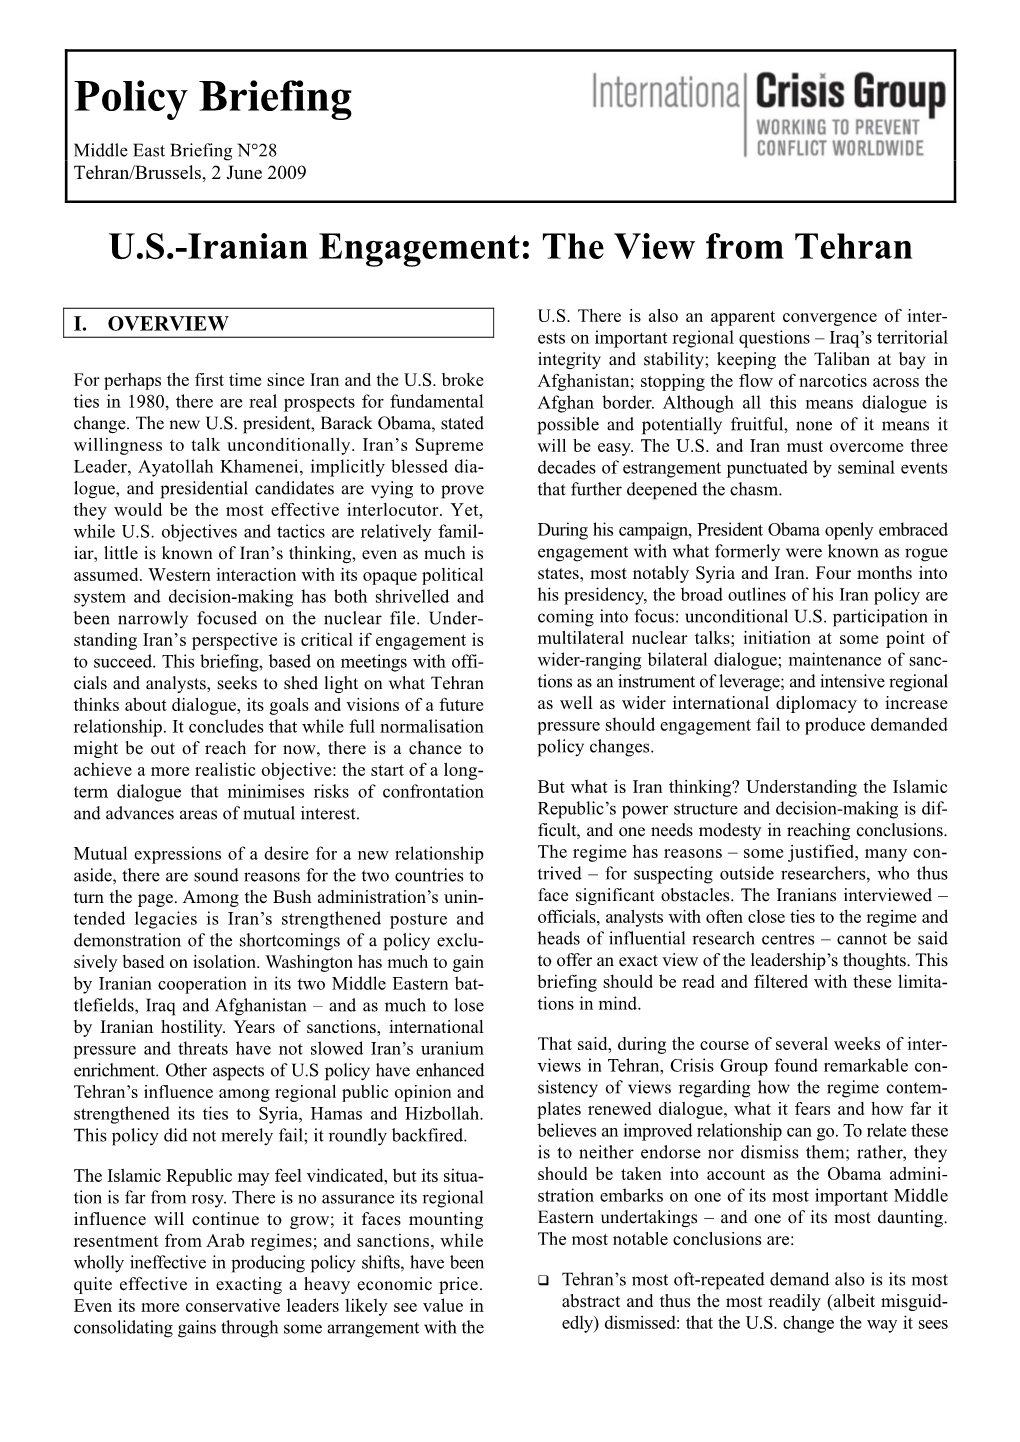 US-Iranian Engagement